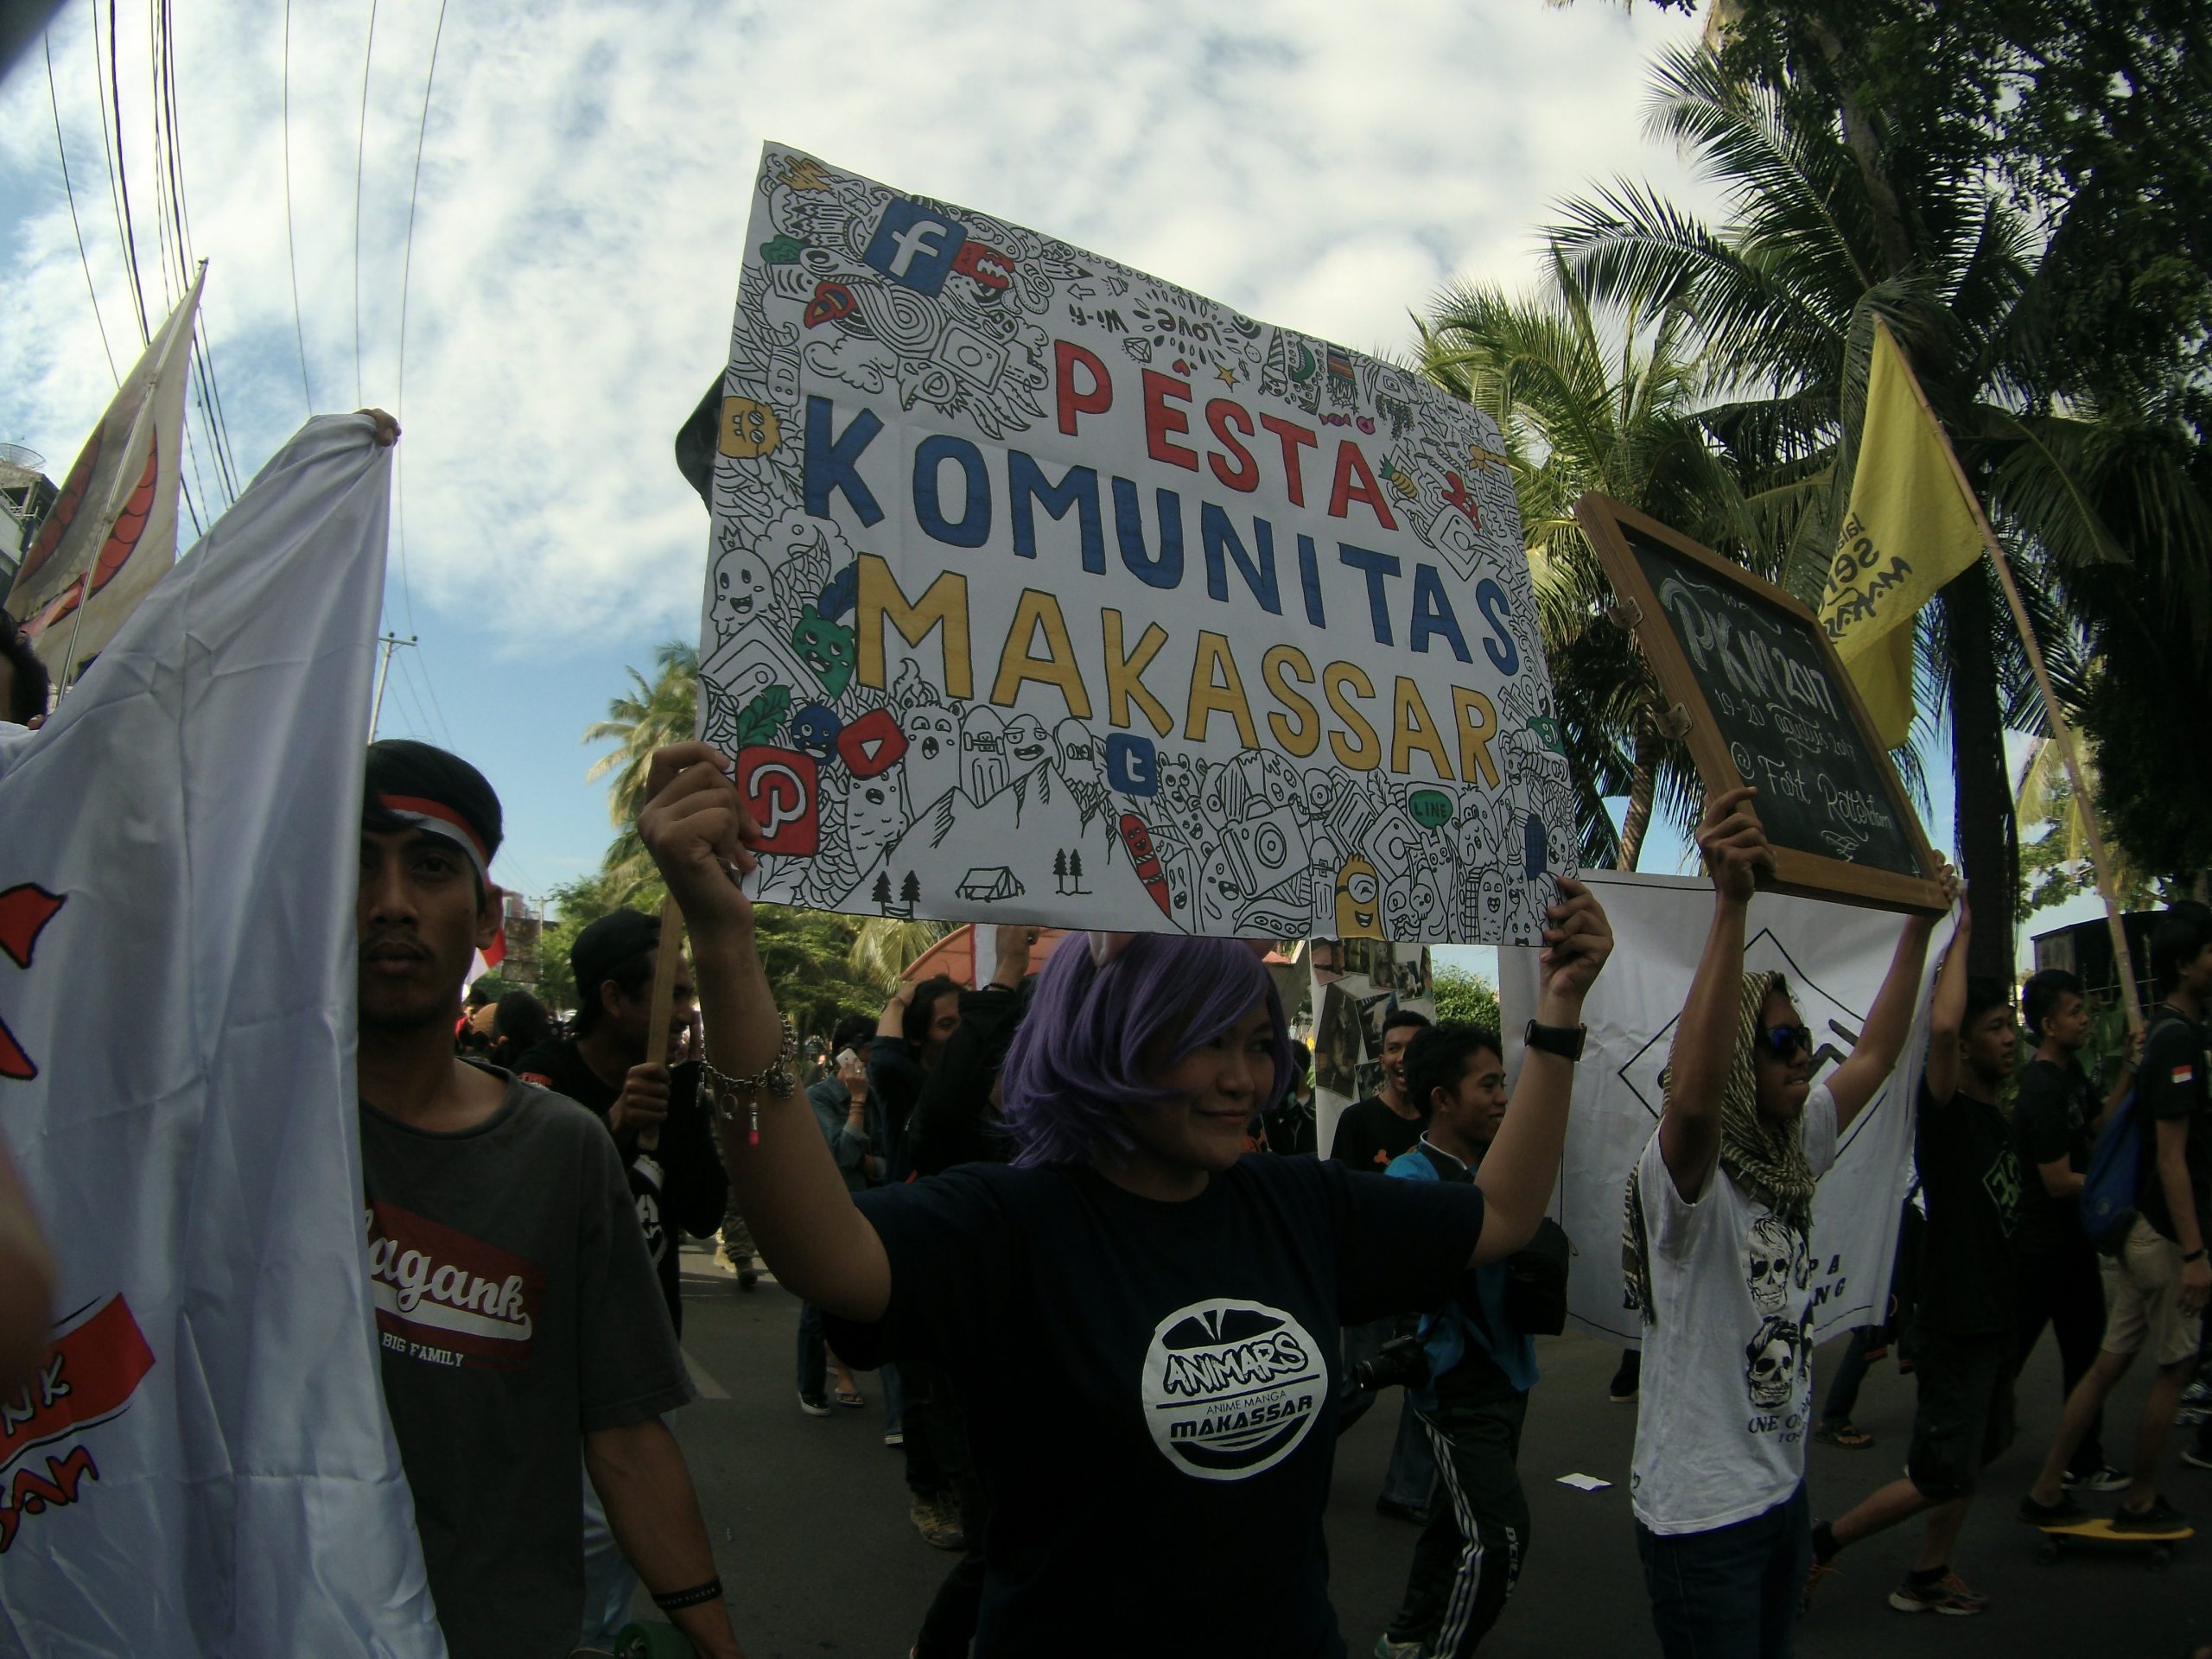 Sambut PKM 2017, Sejumlah Komunitas Makassar Gelar Aksi Turun ke Jalan